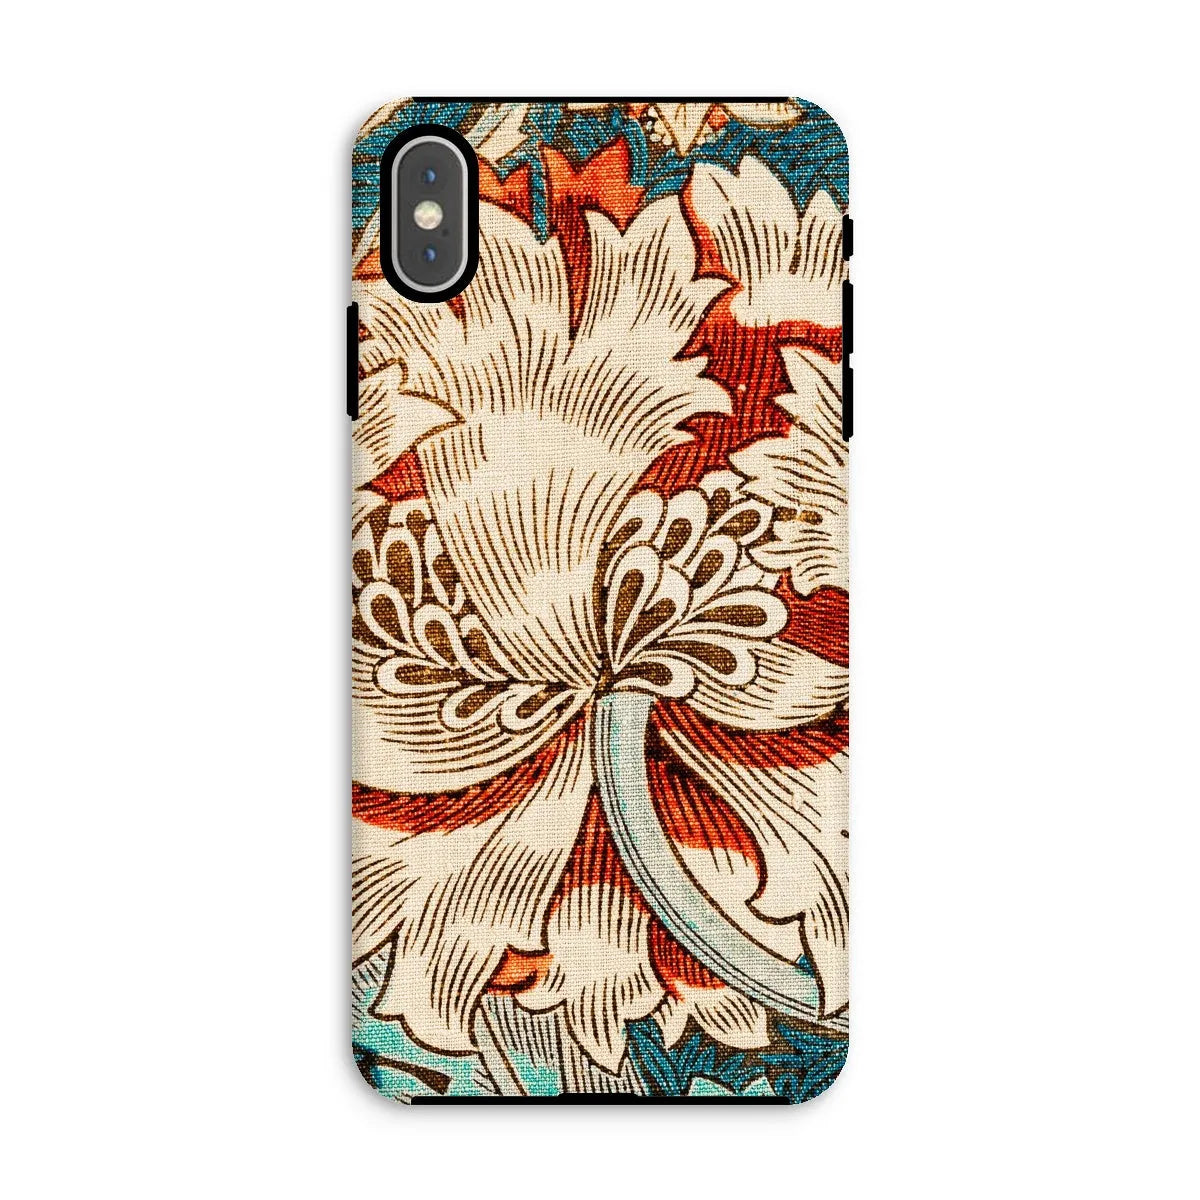 Honeysuckle Too By William Morris Phone Case - Iphone Xs Max / Matte - Mobile Phone Cases - Aesthetic Art